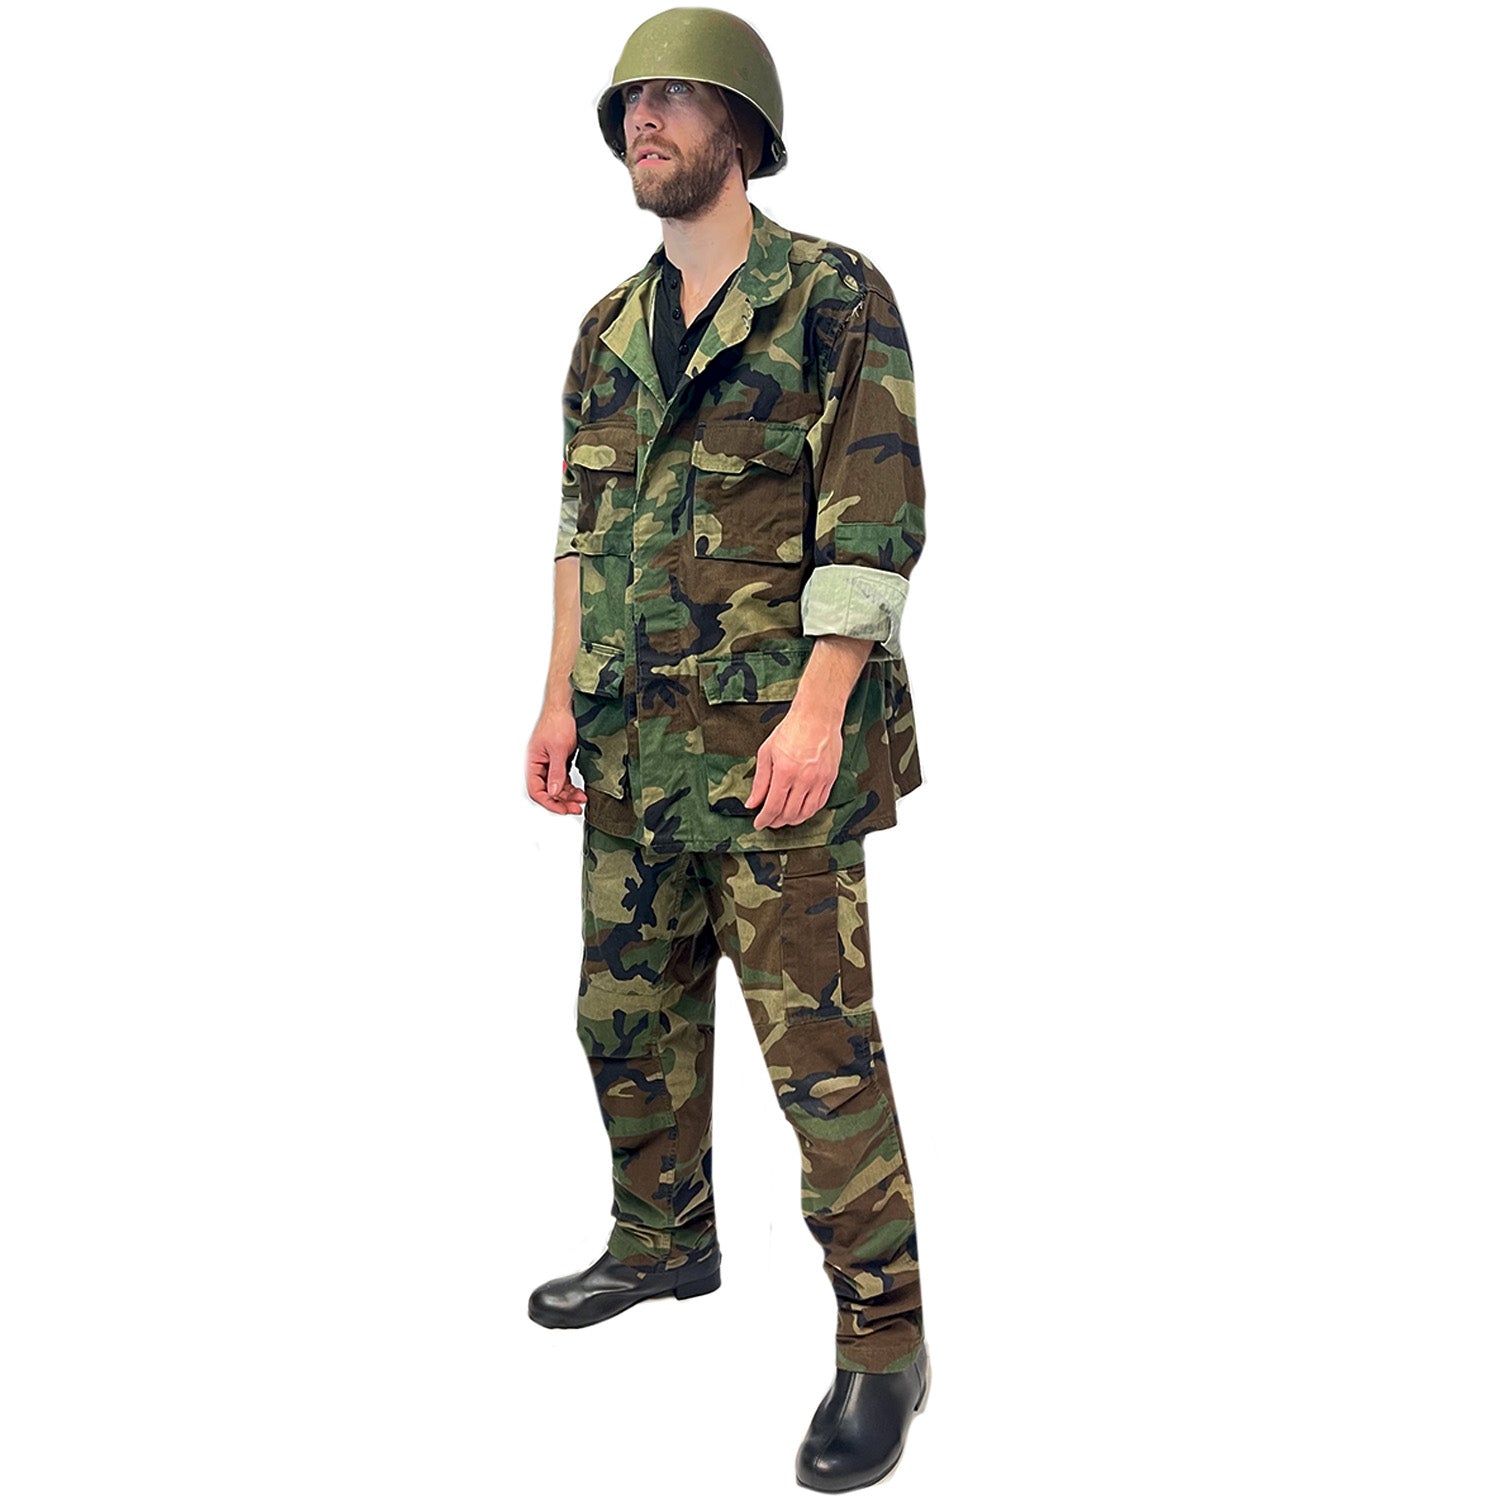 Original Military Jungle Camoflauge Uniform Adult Costume